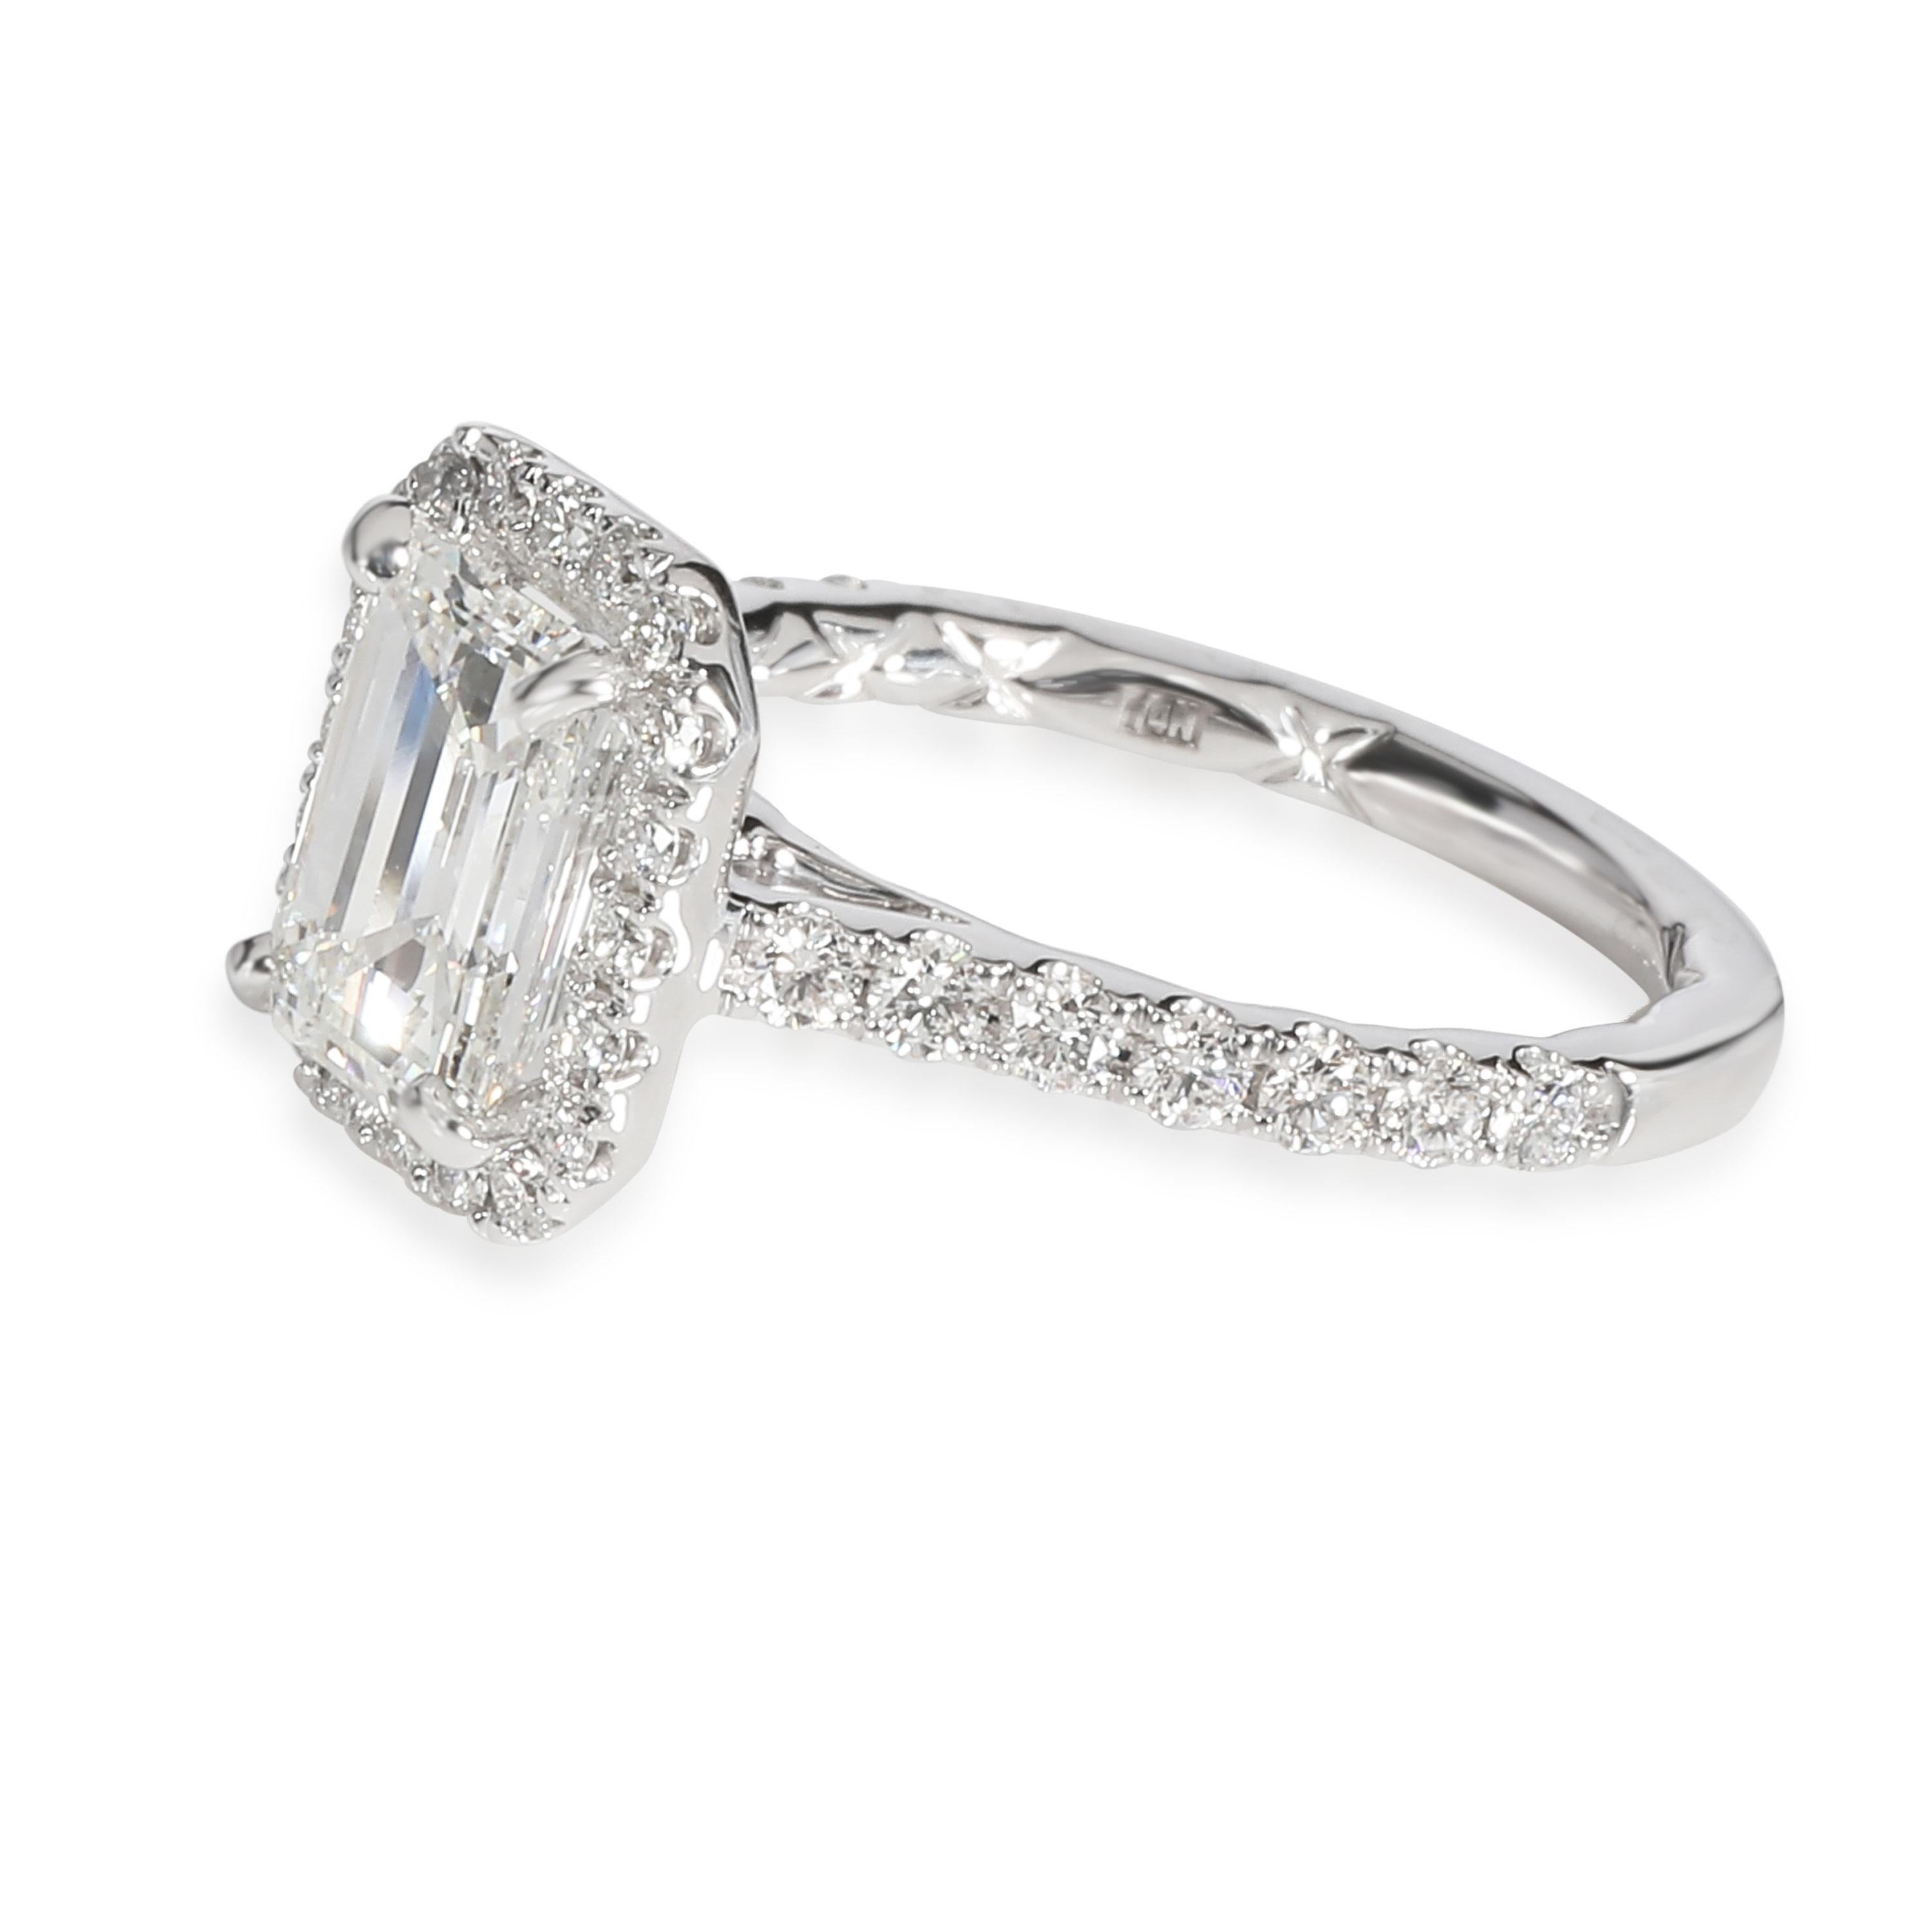 Emerald Cut Emerald Halo Diamond Engagement Ring in 14 Karat White Gold G VS2 2.01 Carat